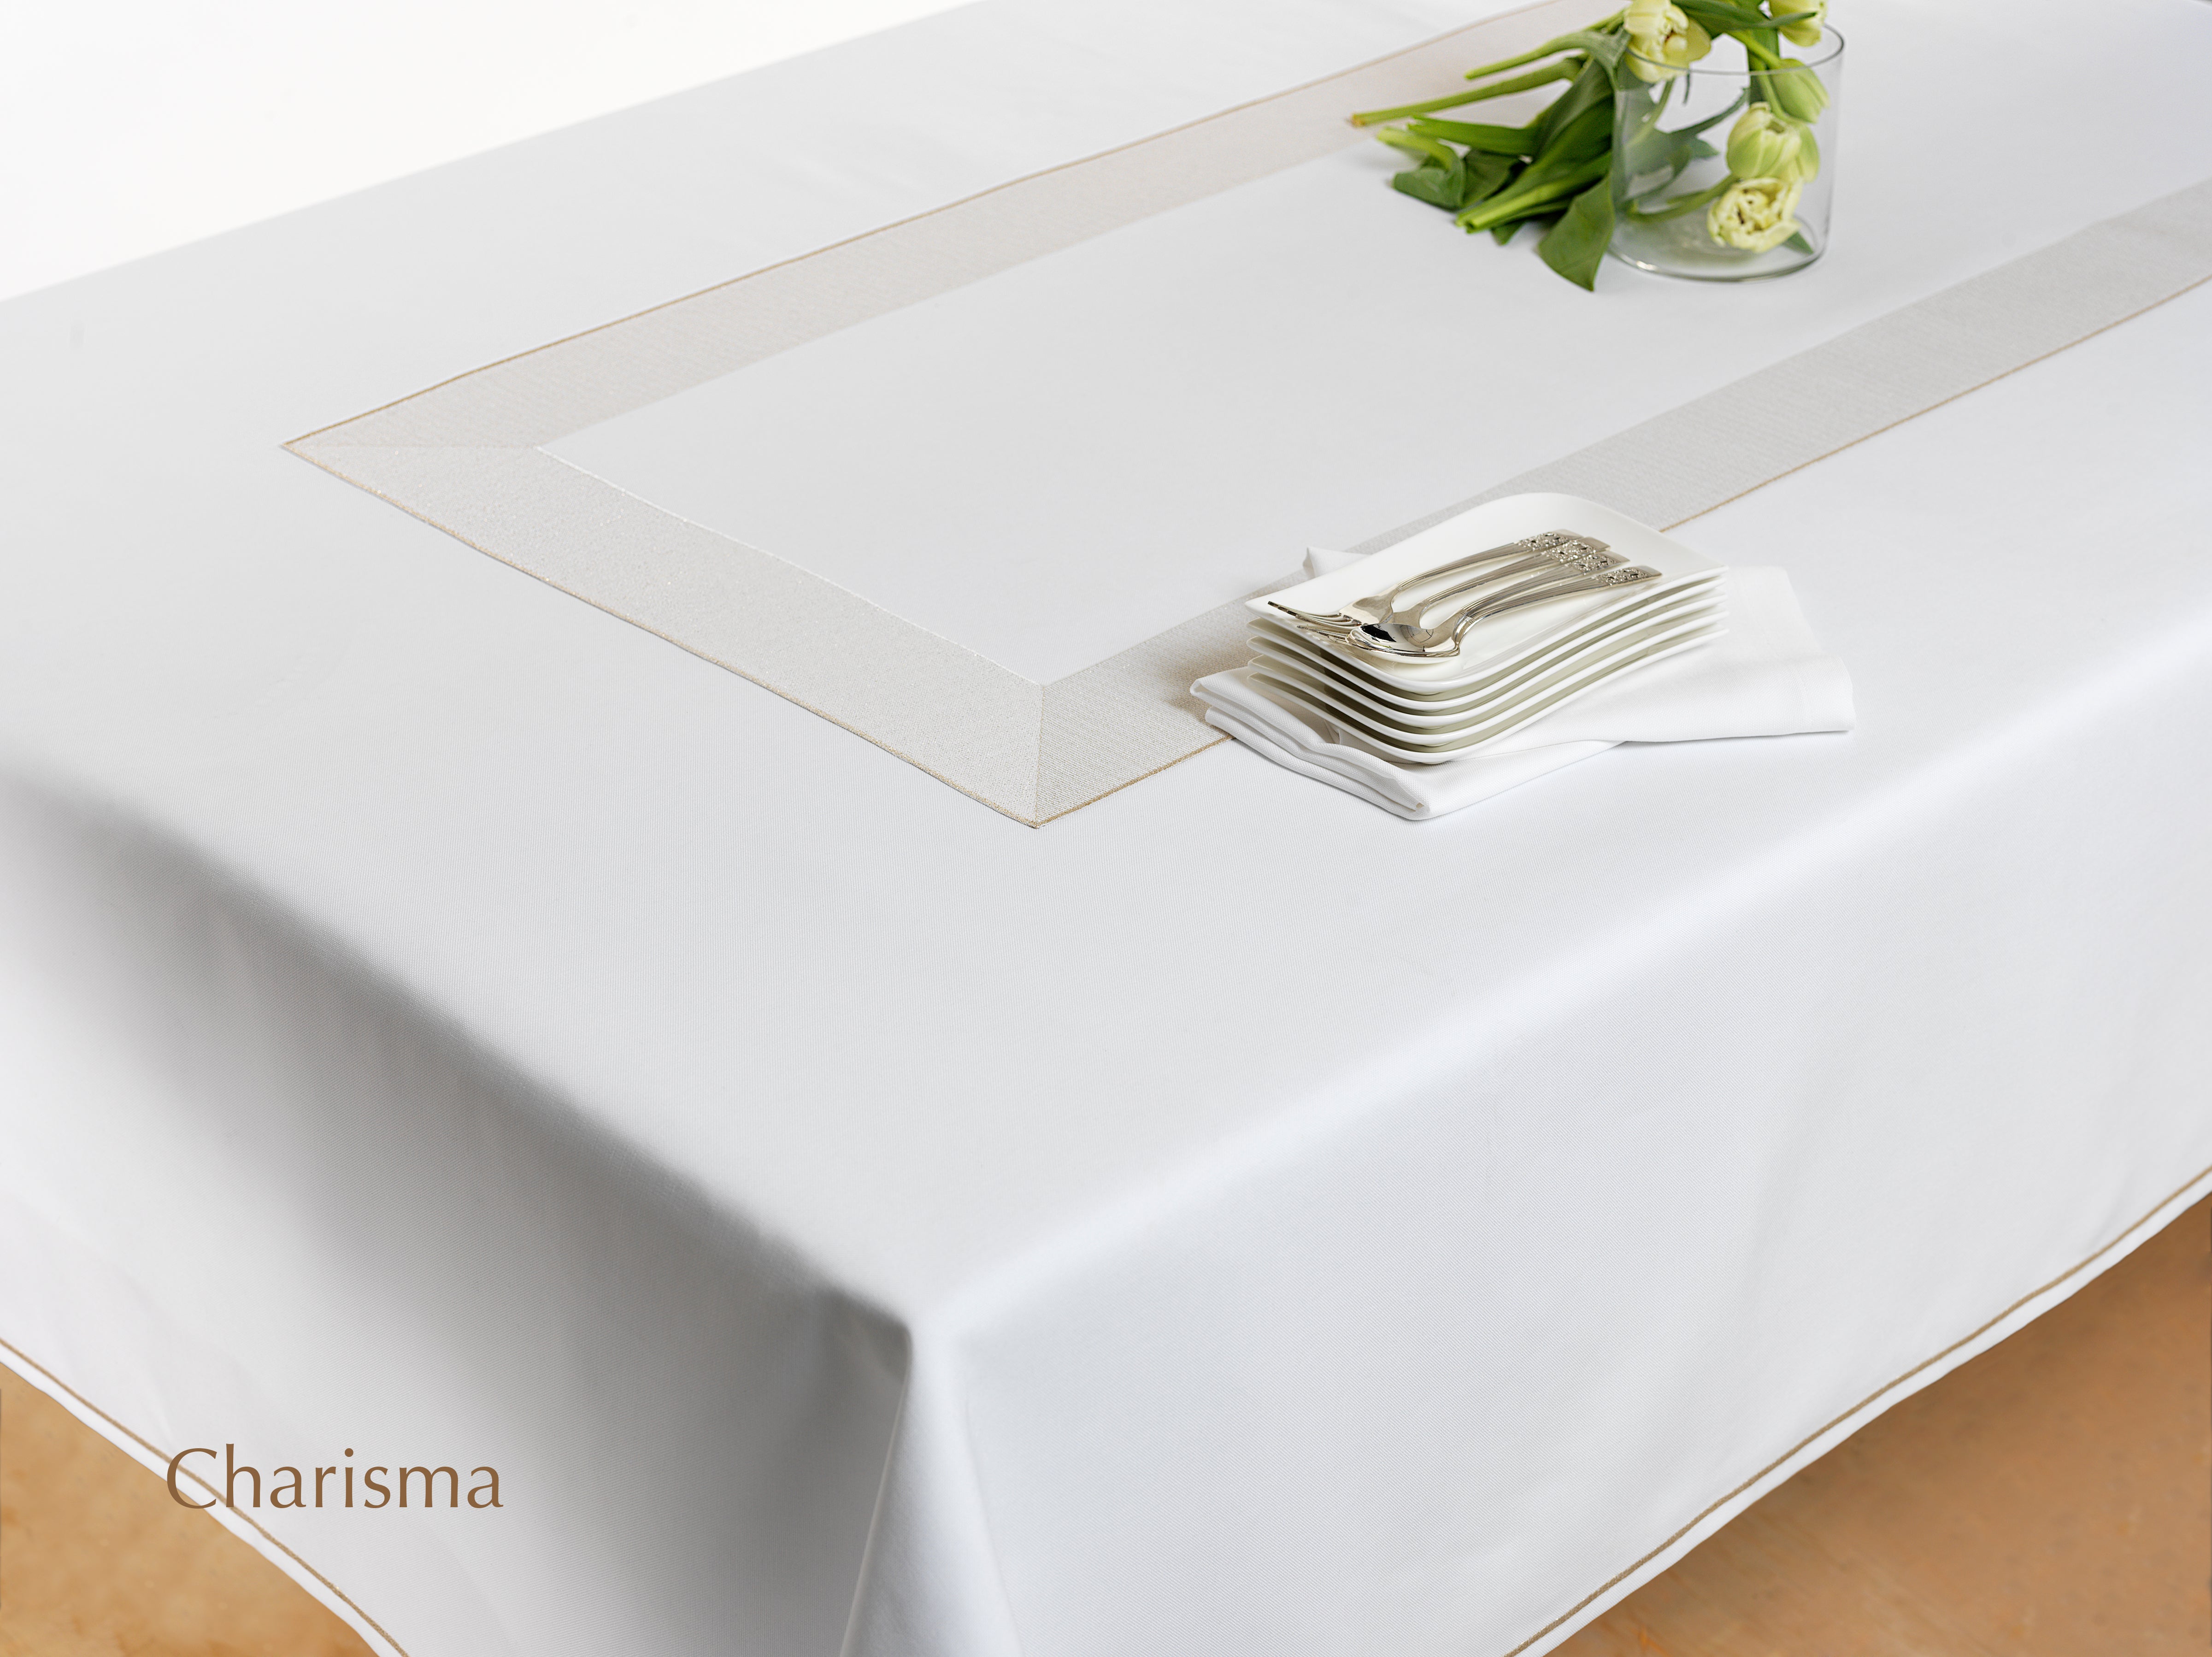 Charisma Tablecloth